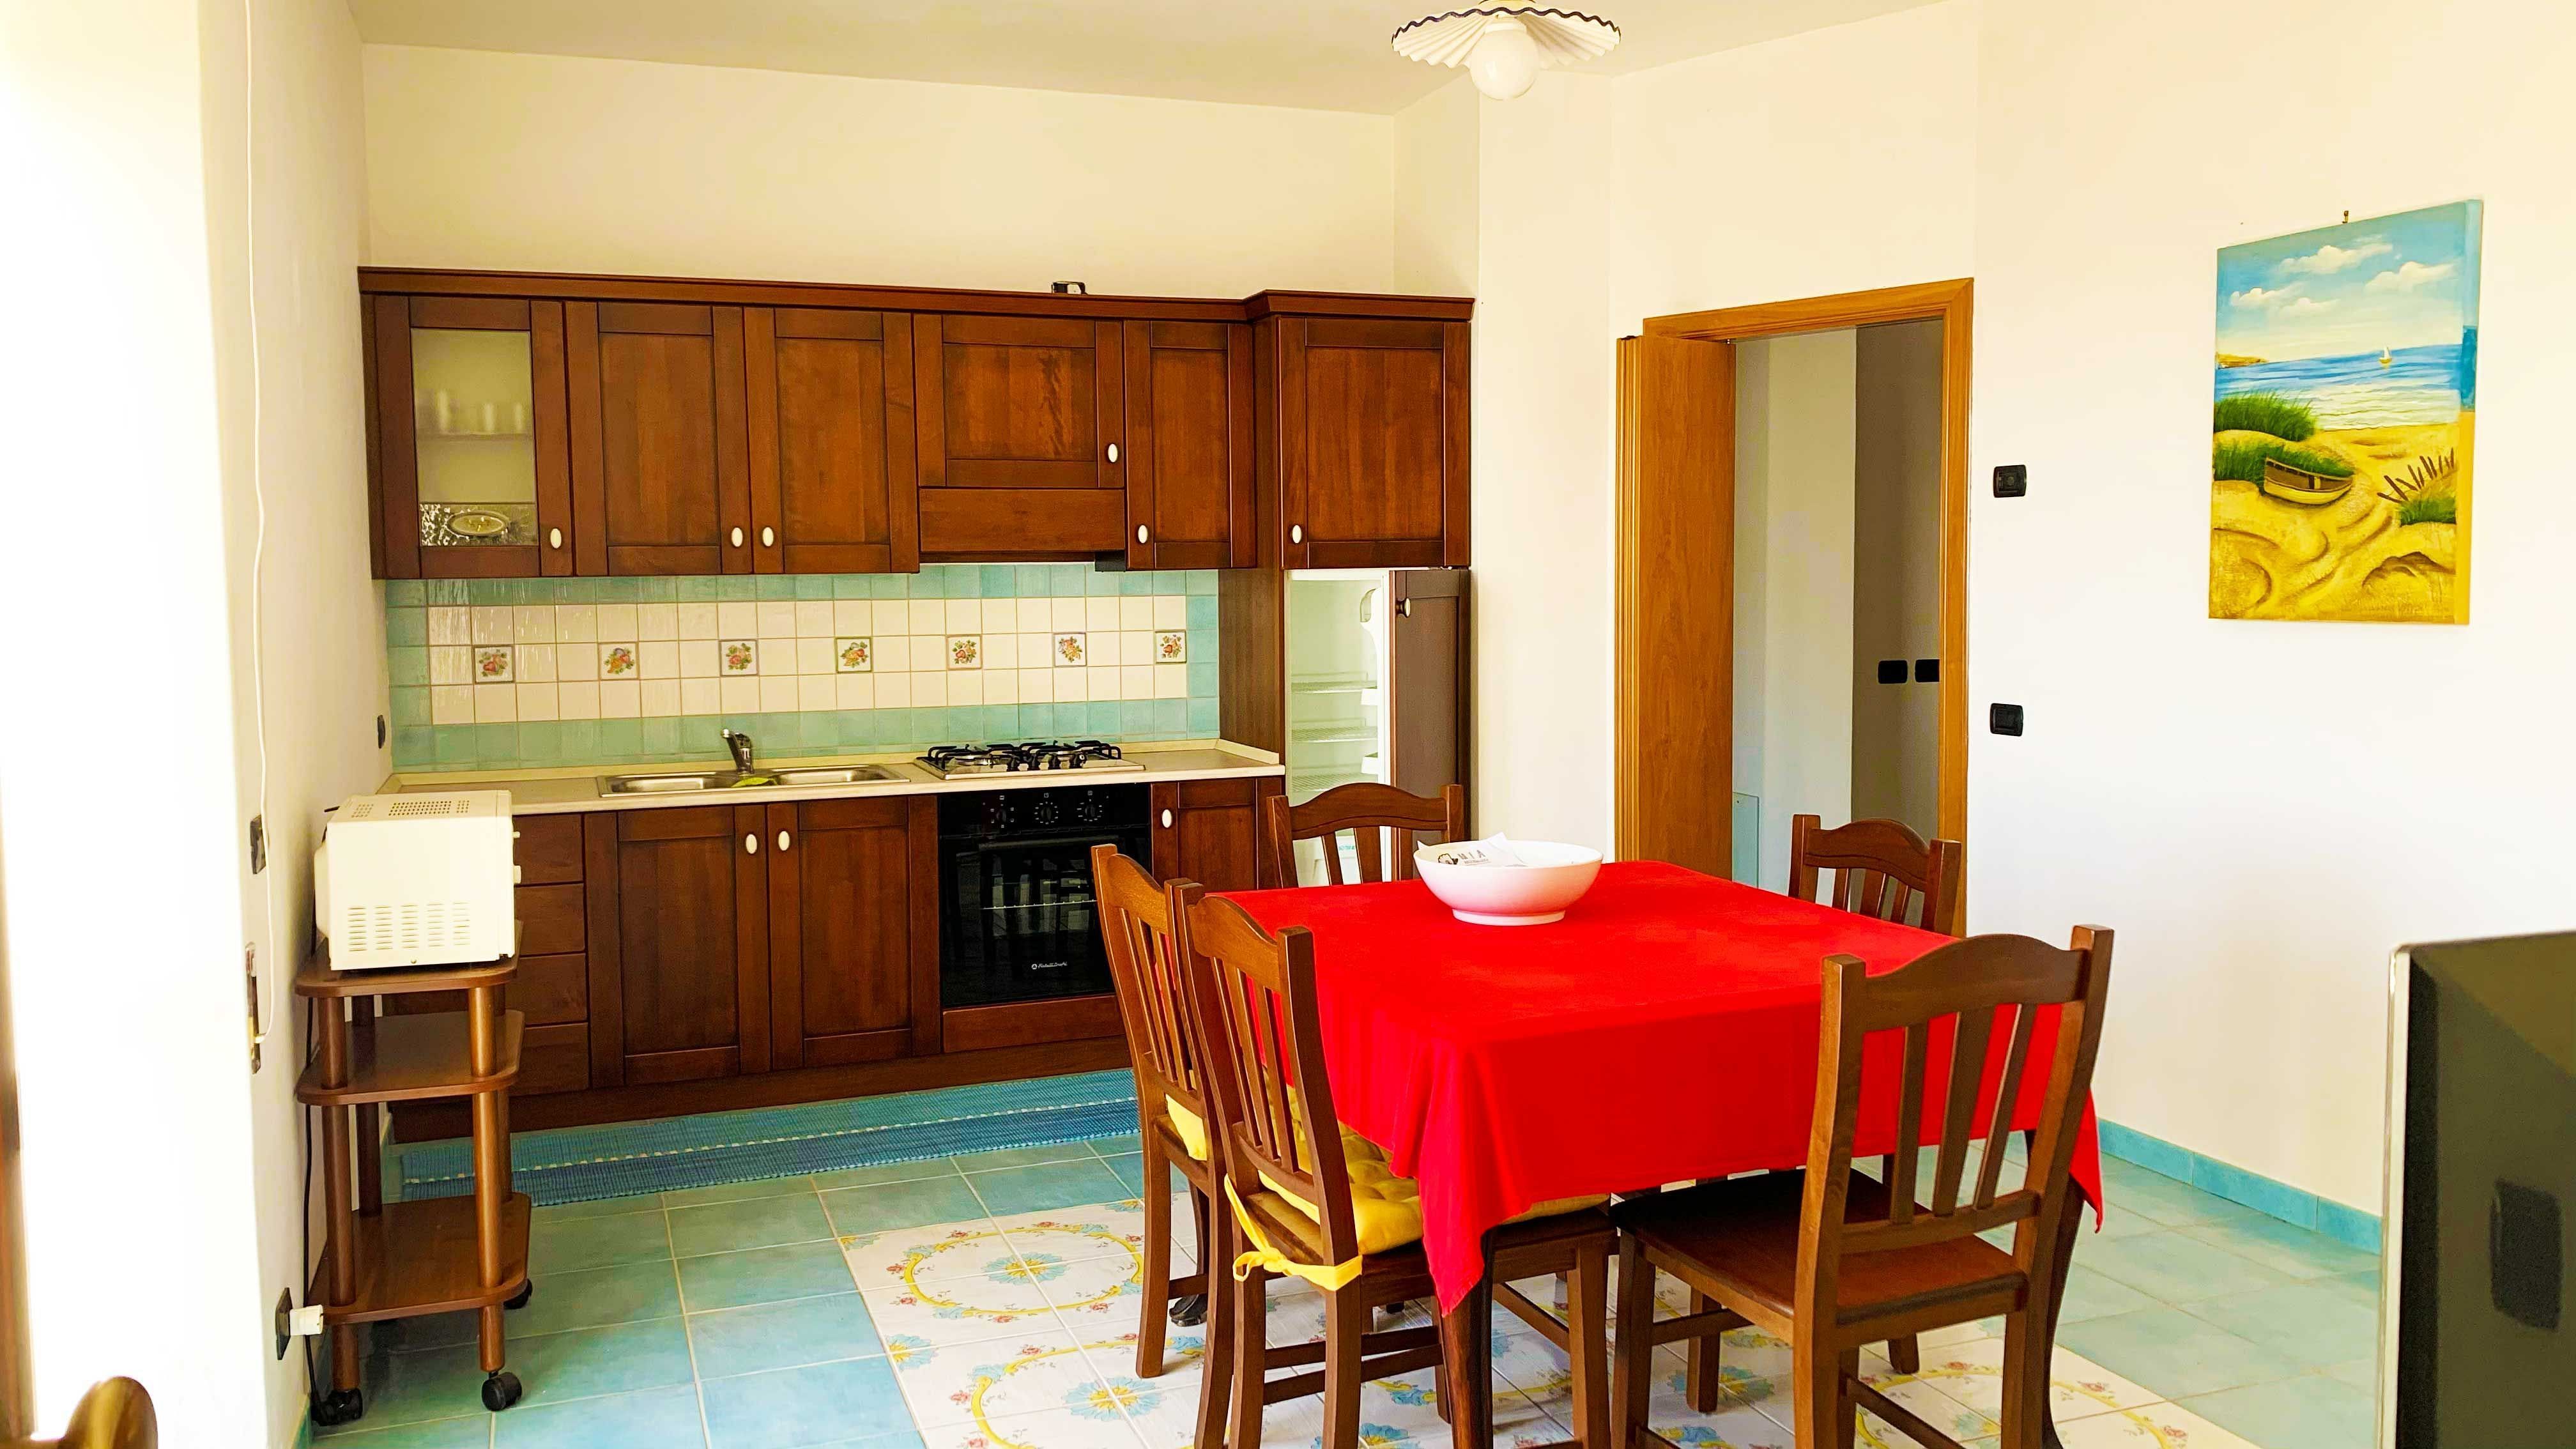 JWguest Apartment at Pianillo, Campania | Residence "Alma" on the Amalfi Coast | Jwbnb no brobnb 3